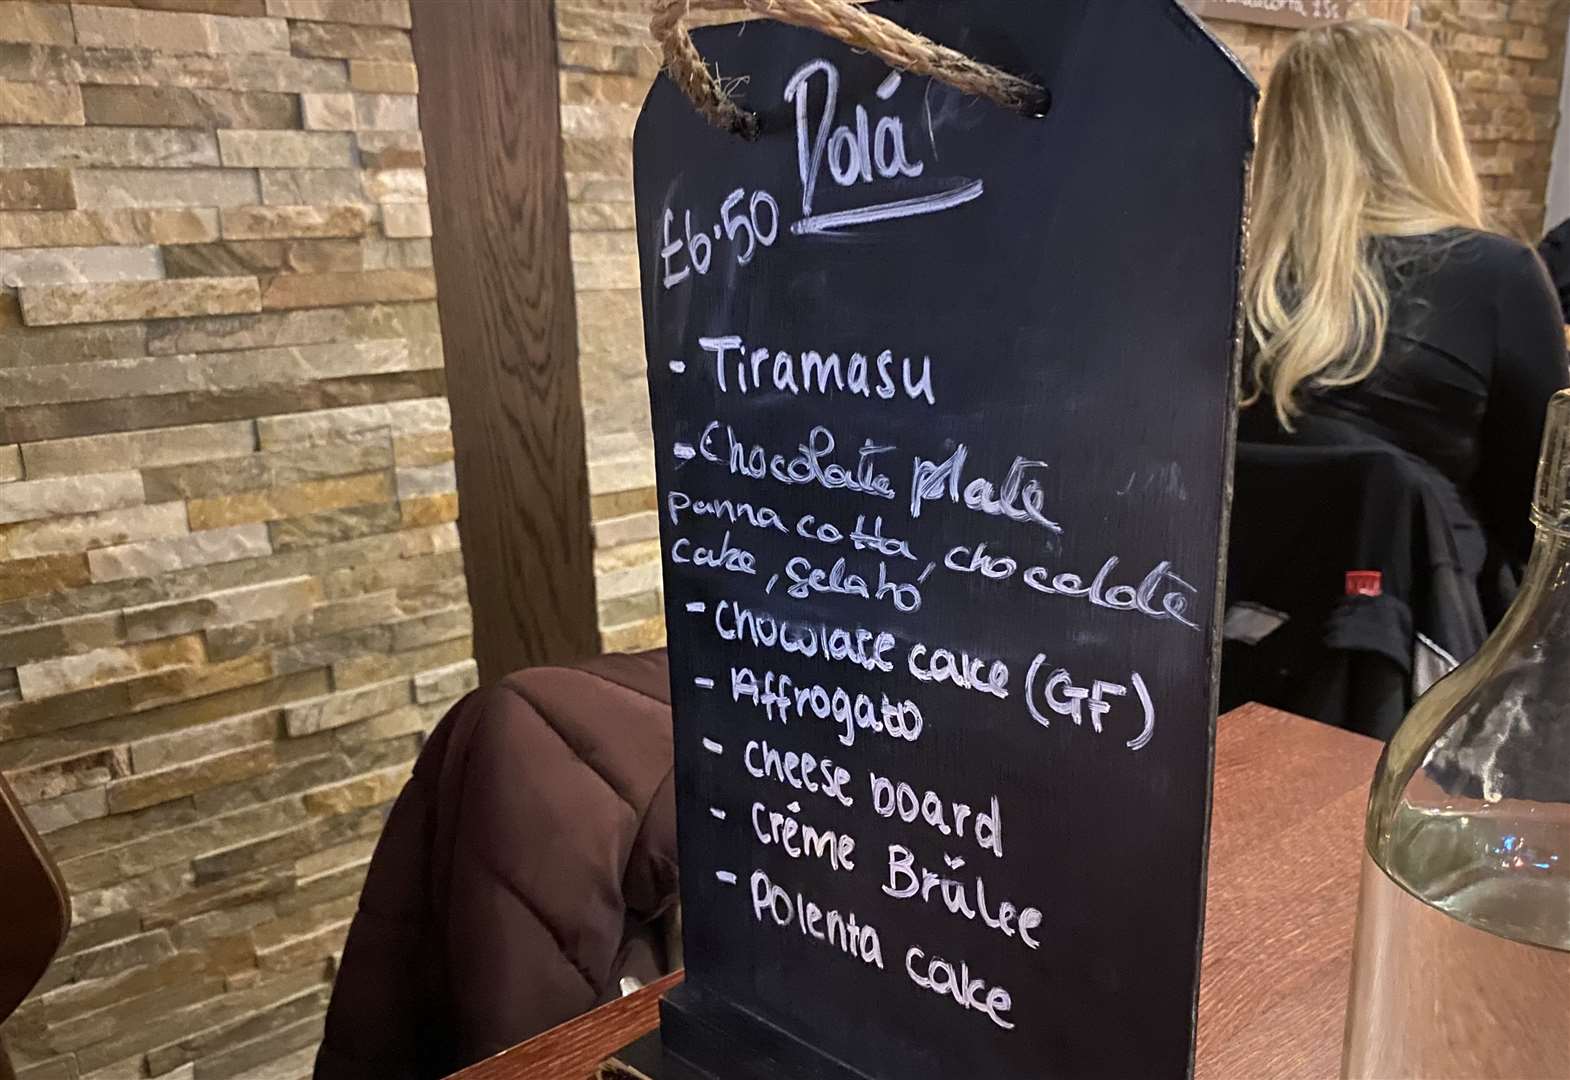 The dessert menu included a panna cotta, tiramisu and creme brulee